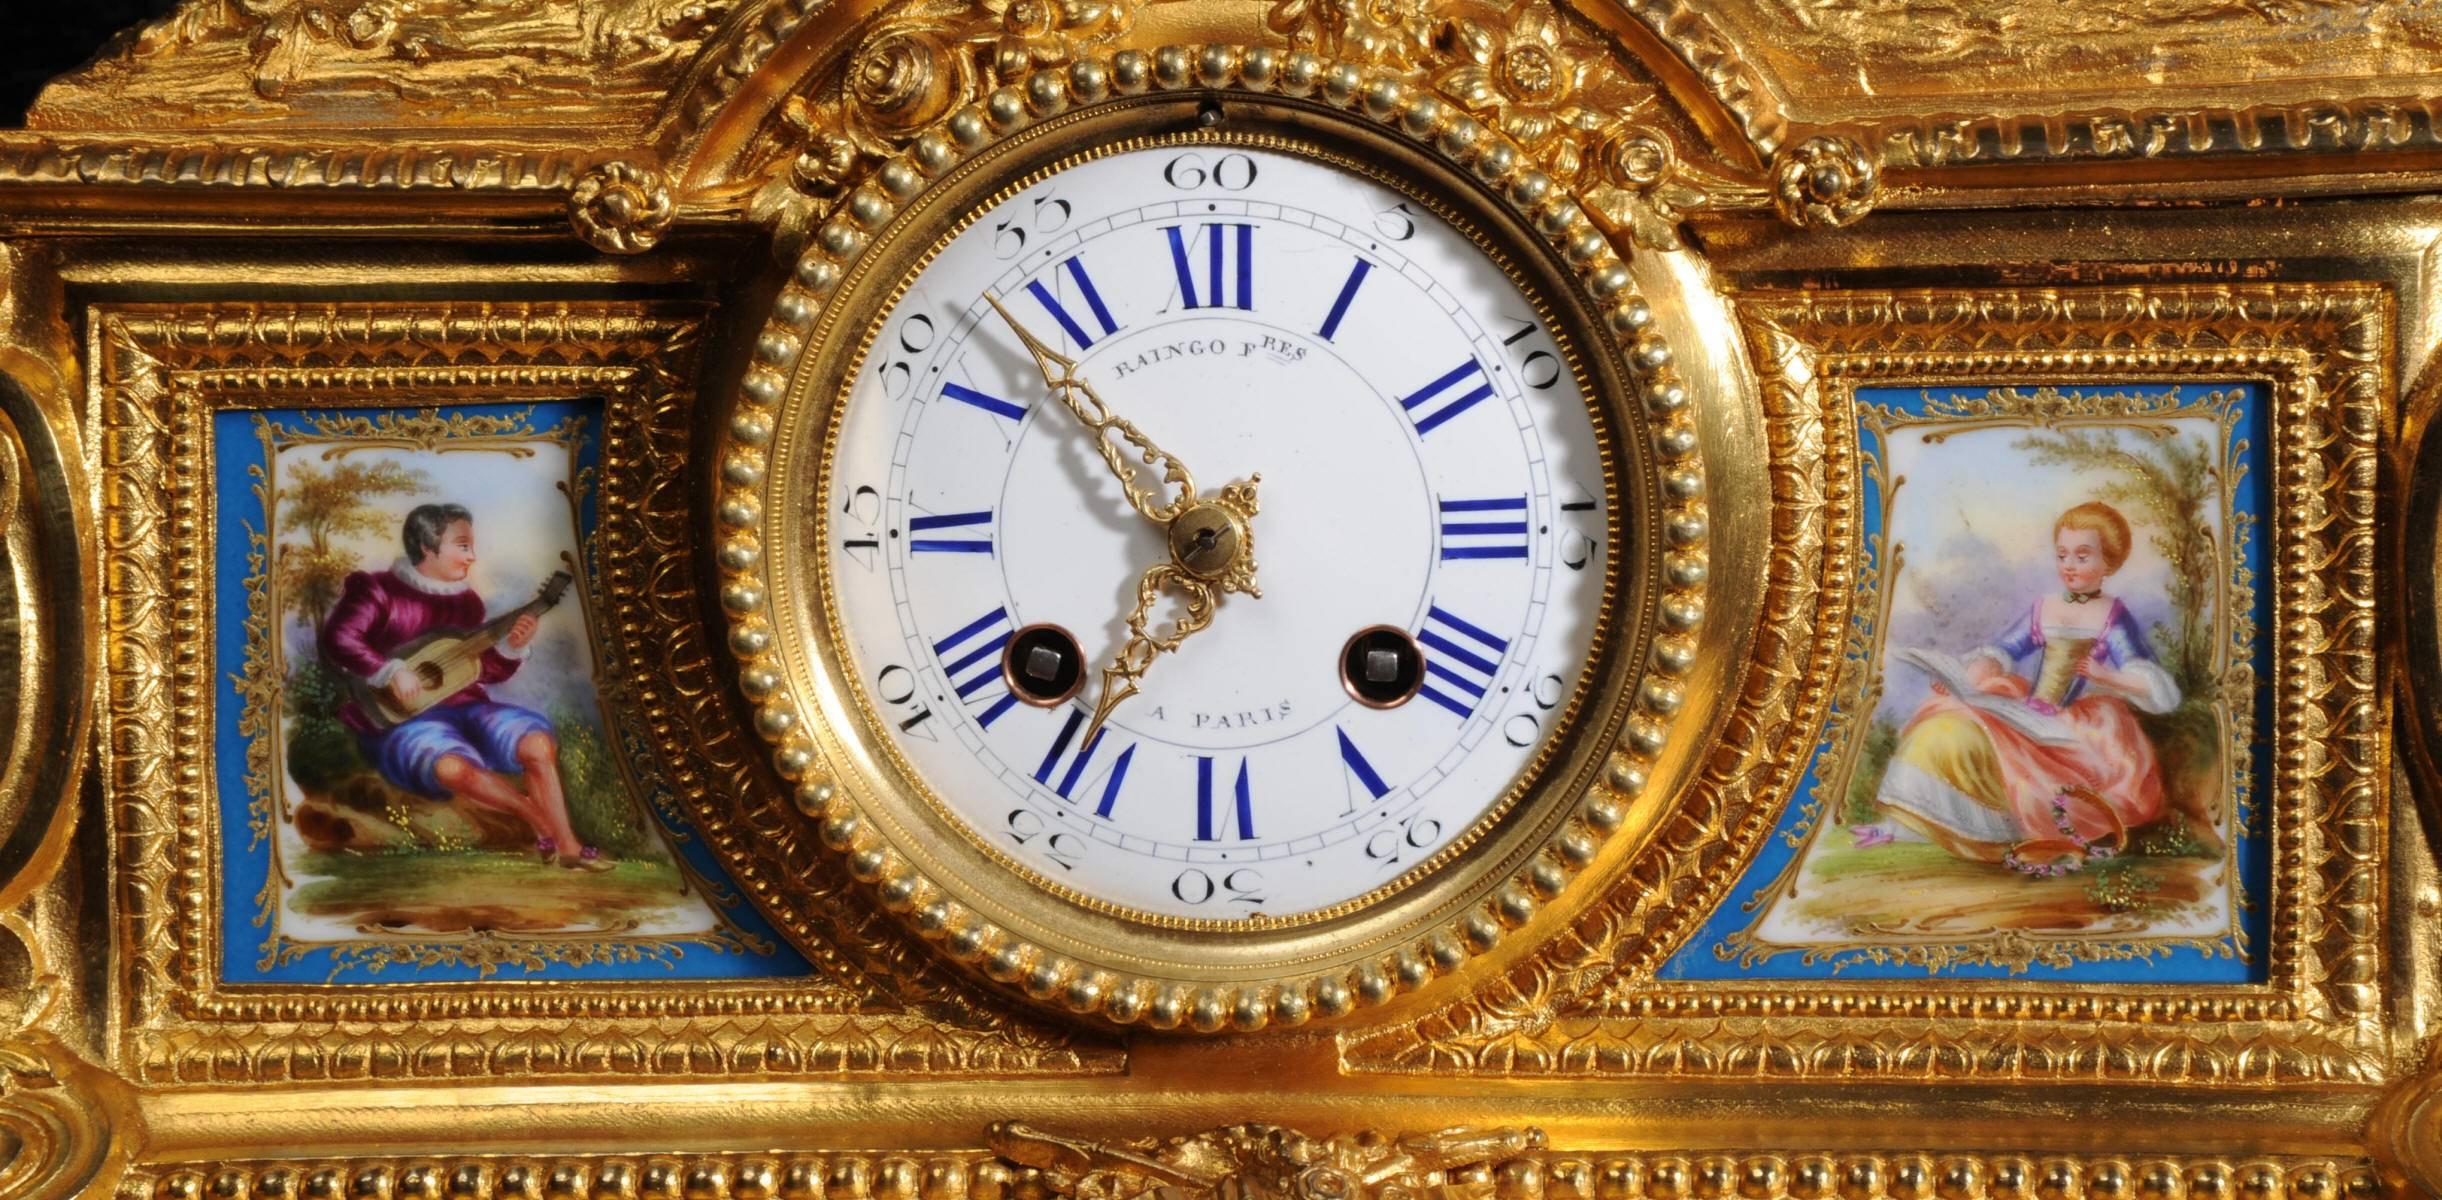 French Fine Ormolu and Sèvres Porcelain Clock by Raingo Frères & Henri Picard of Paris